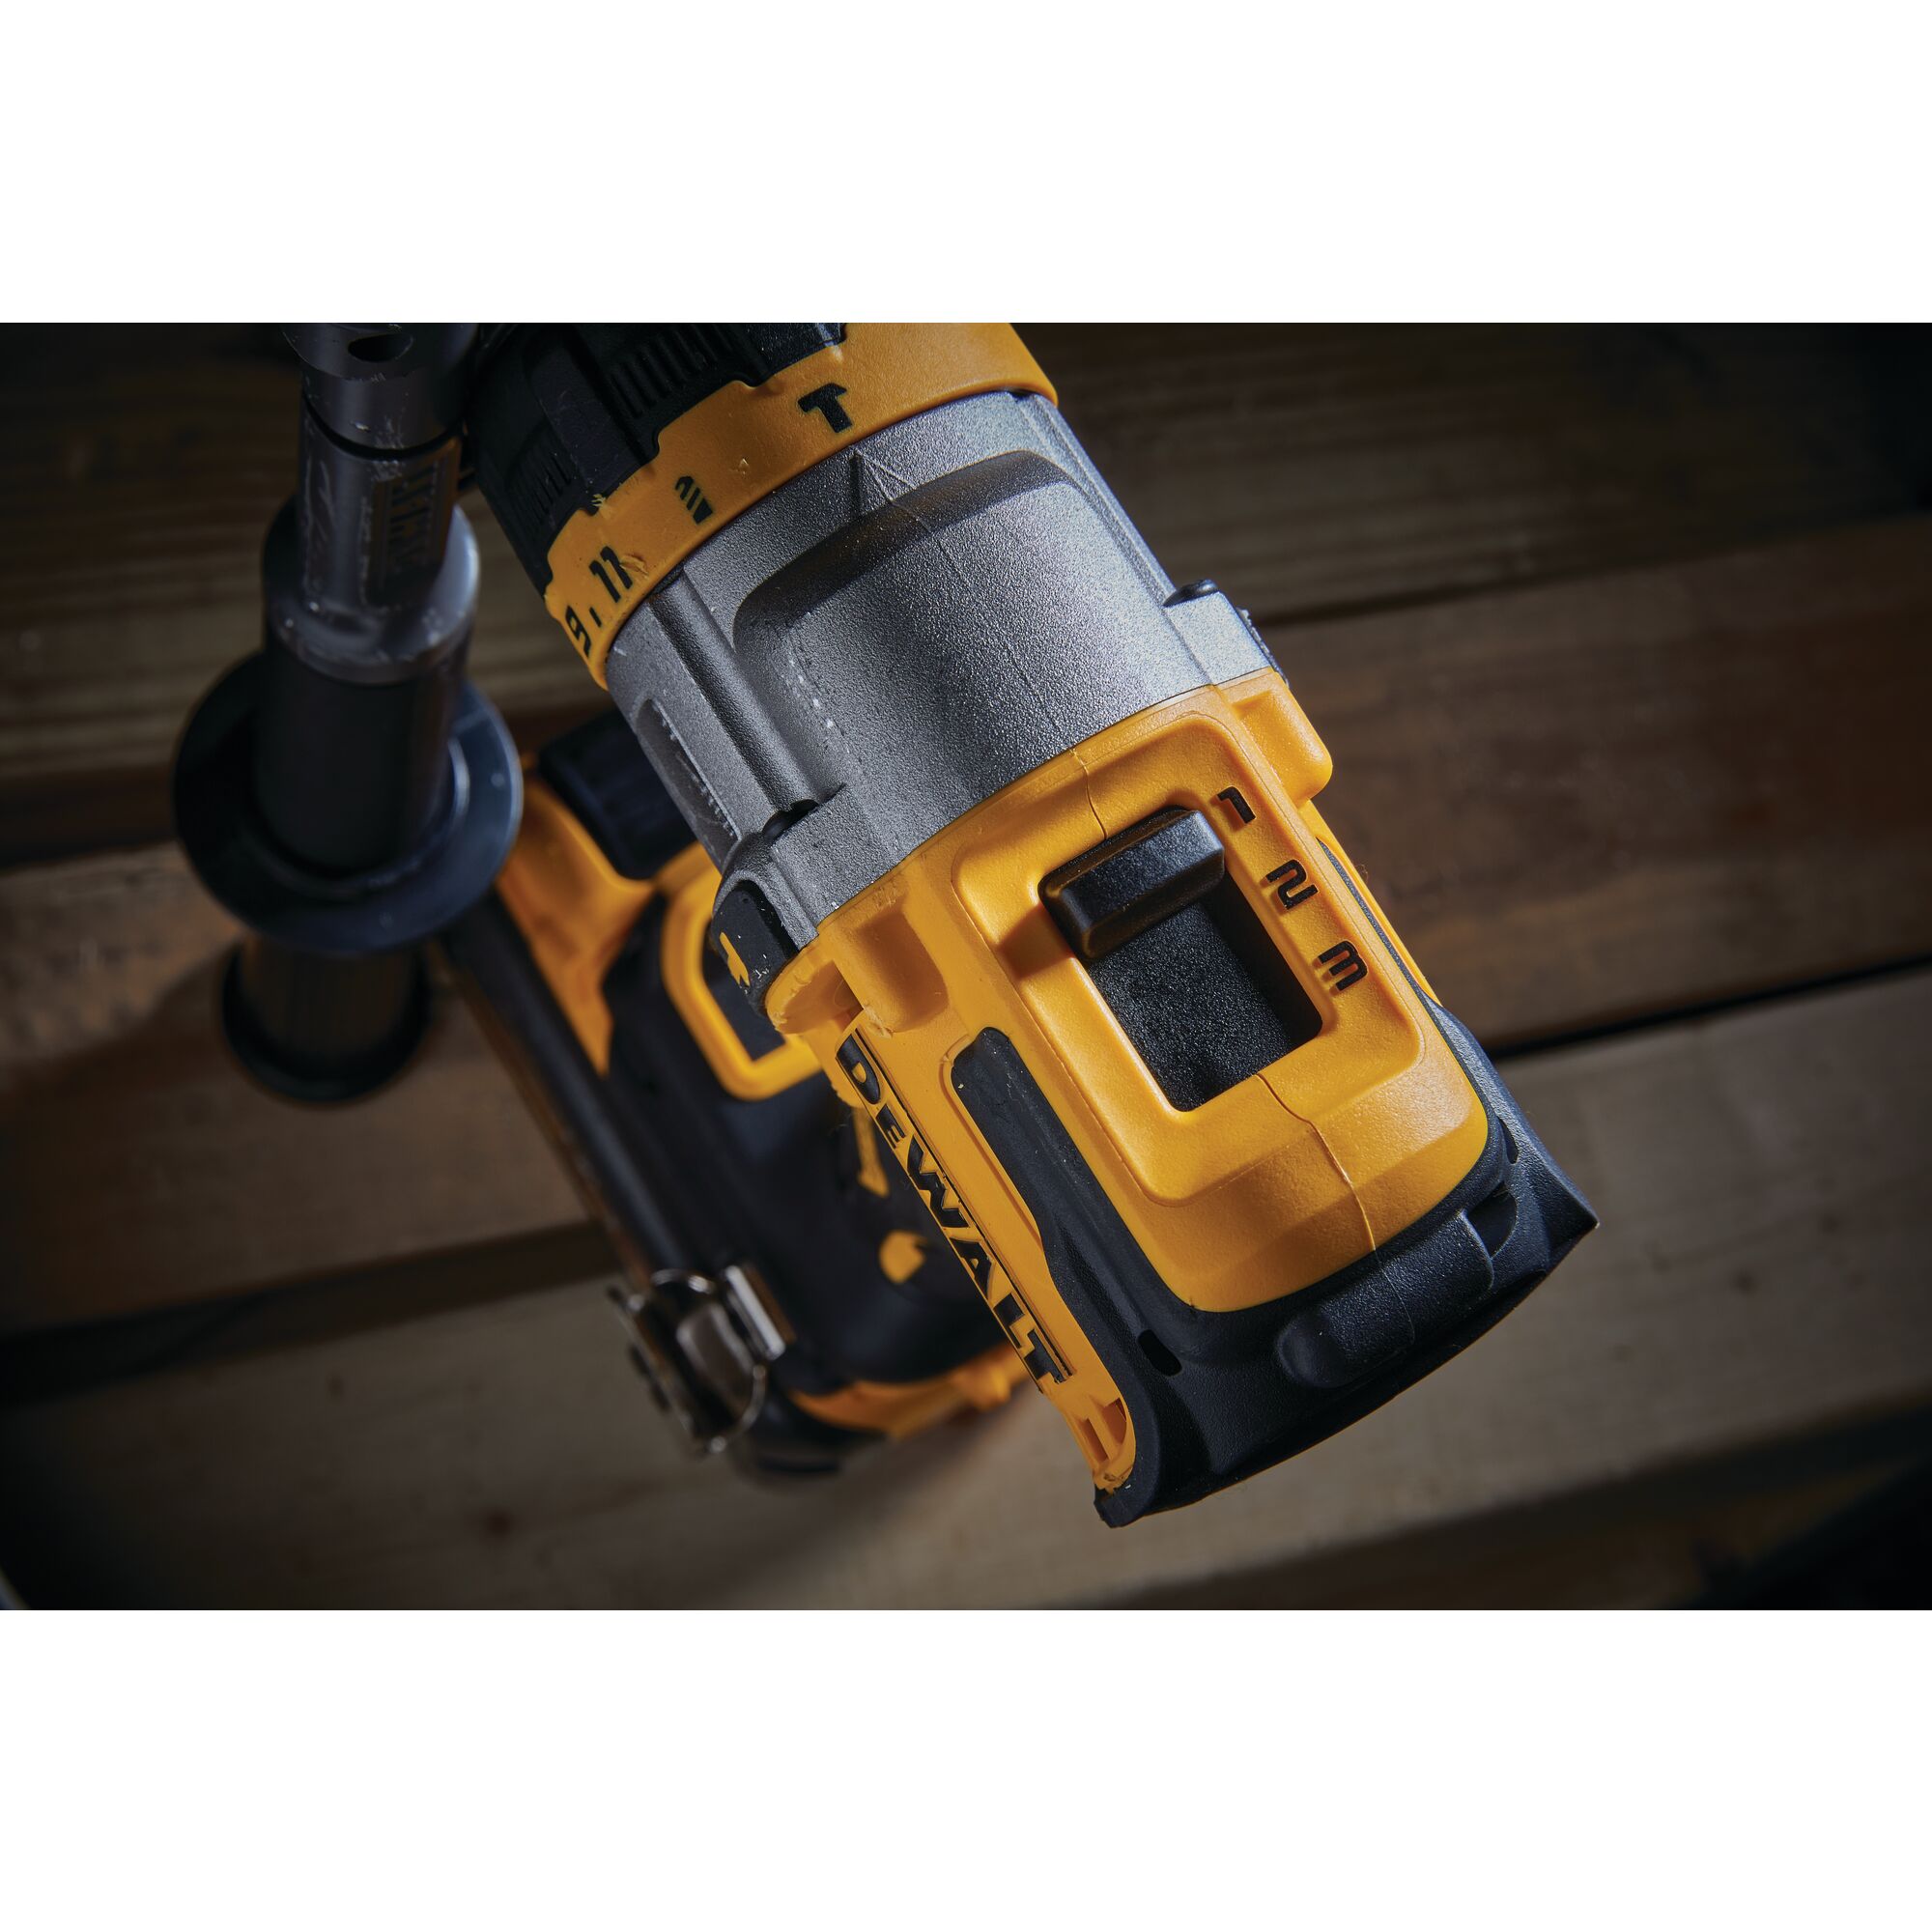 DEWALT DCD999B 20V Max Cordless Hammer Drill/Driver for sale online 